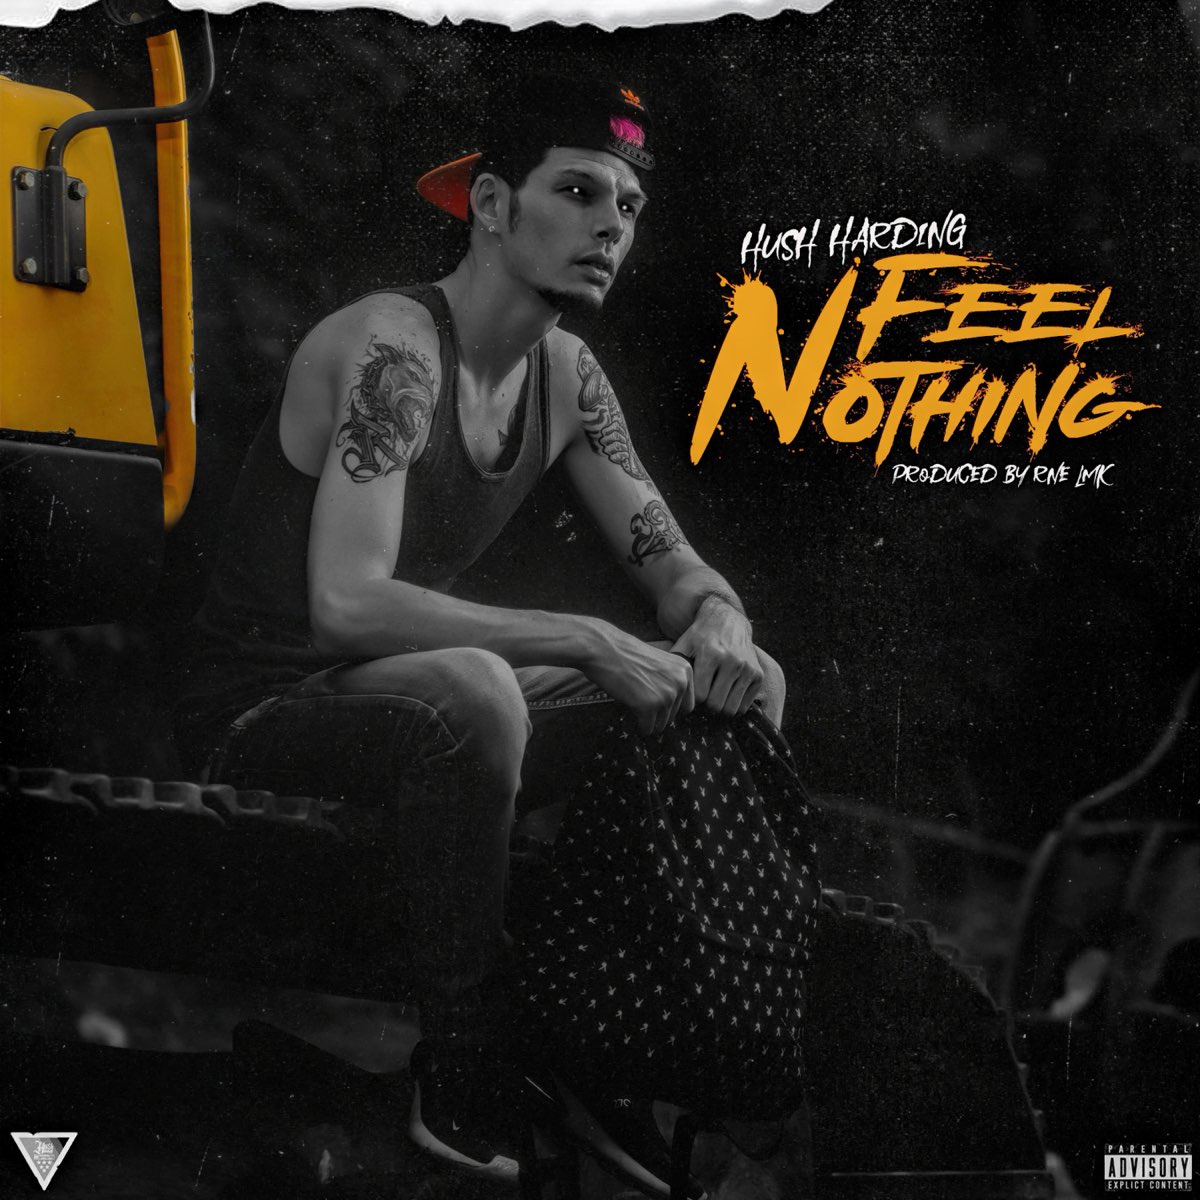 Feel nothing better. Feel nothing. Hush песня. Hu'sh песня. Album Art Hush (Mont Remix).